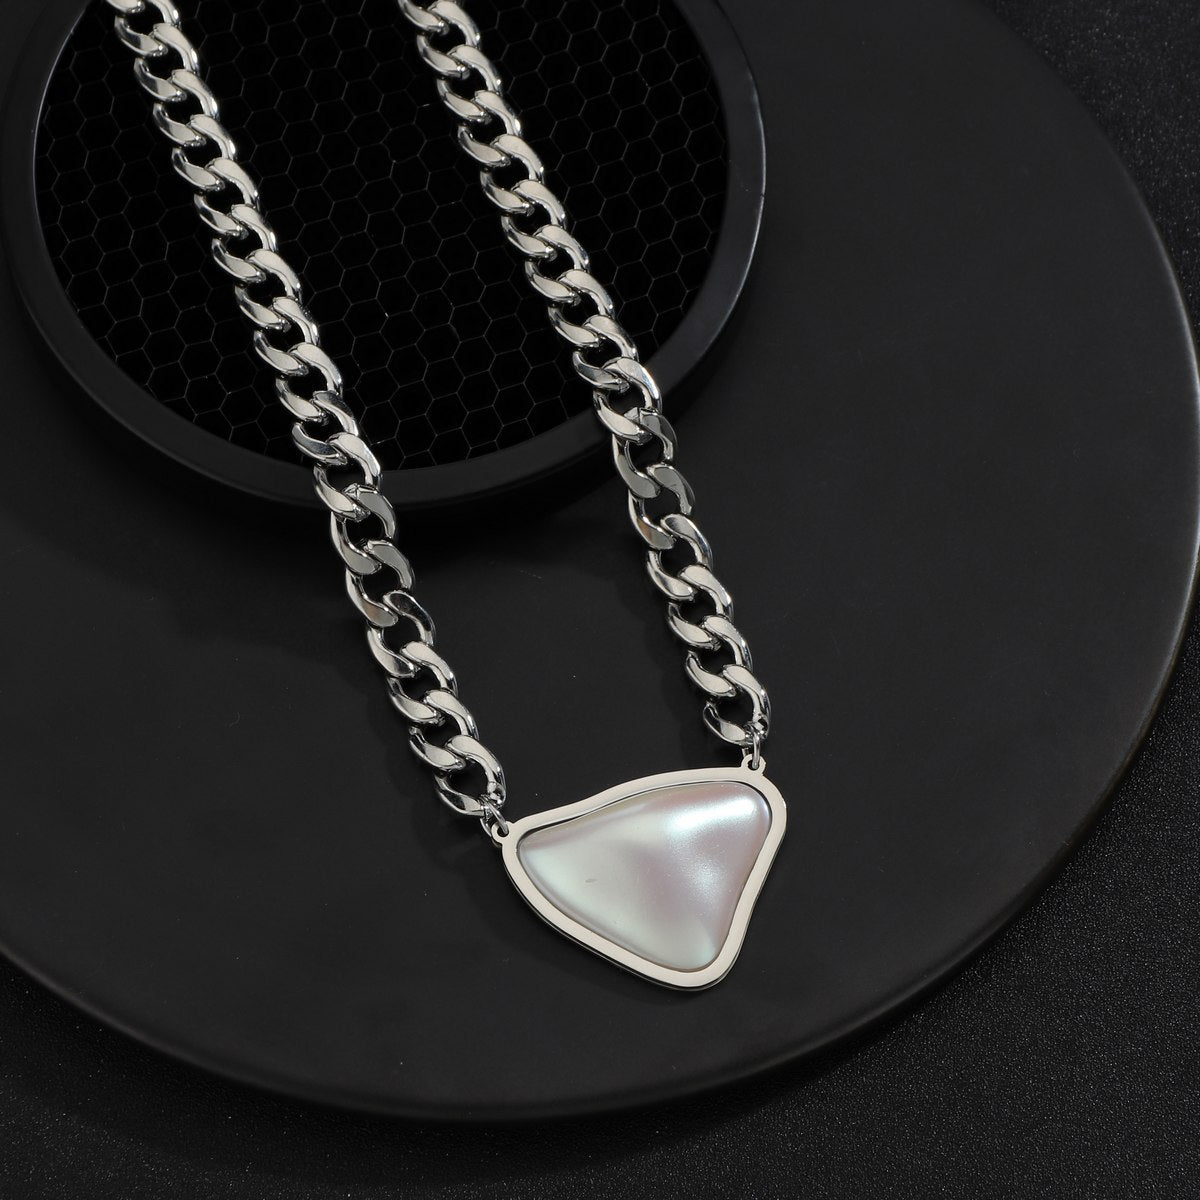 Heartbeat Steel Necklace by Planderful - Hip-Hop Street Style Jewelry for Men